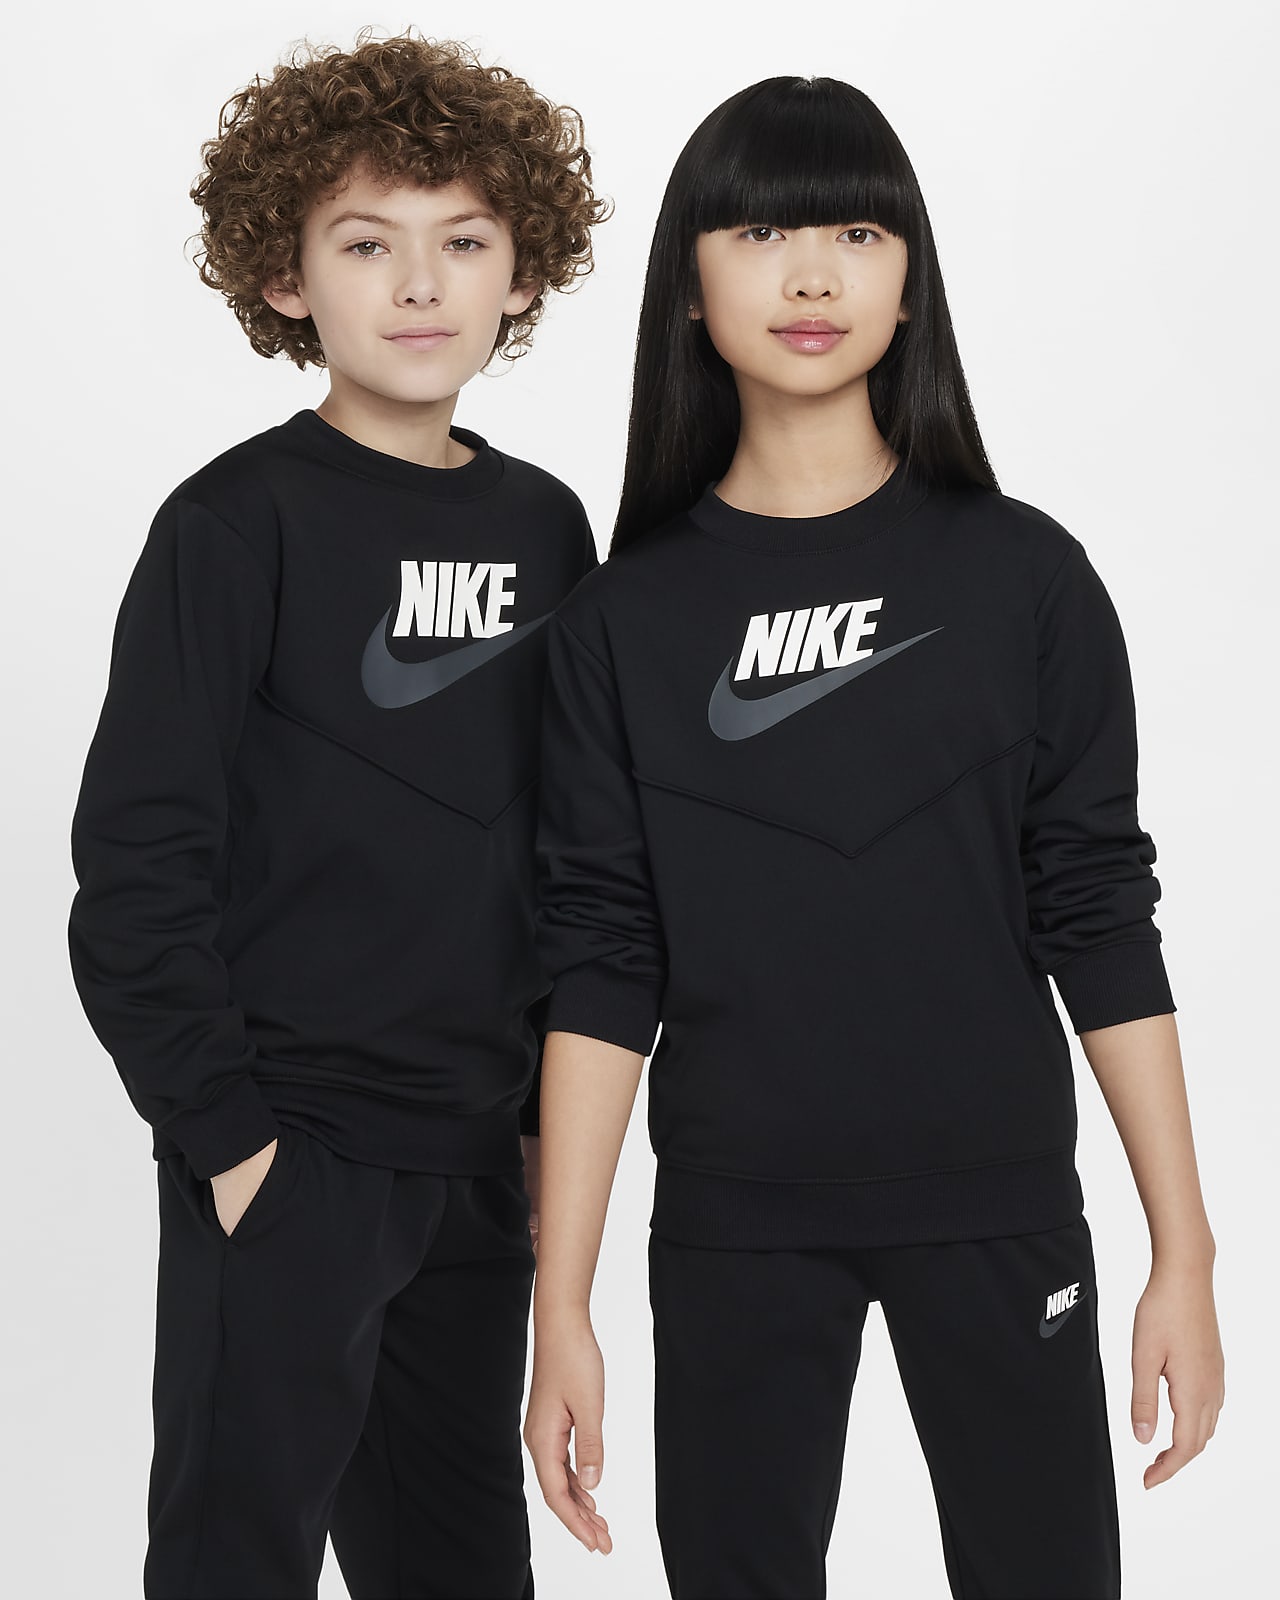 Girls Tracksuits. Nike LU